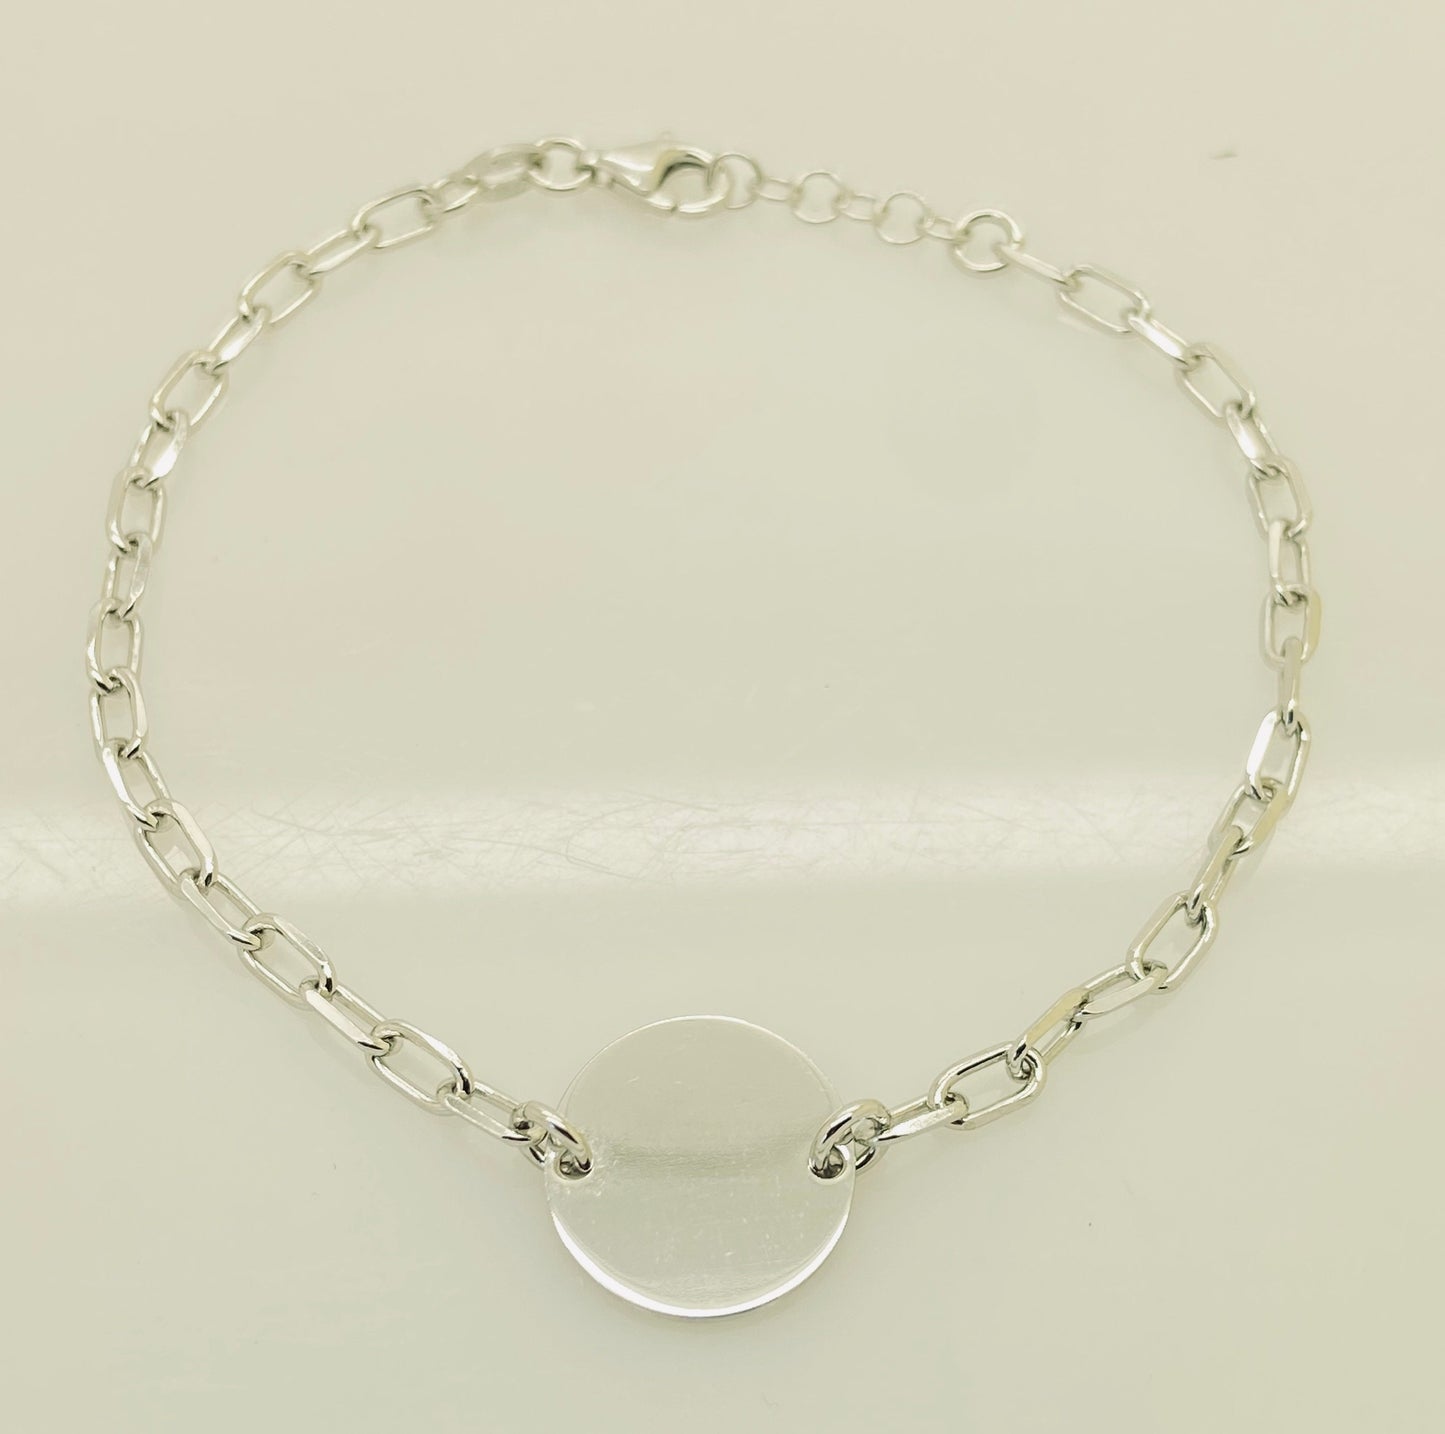 Round Disc Chain Link Adjustable Bracelet